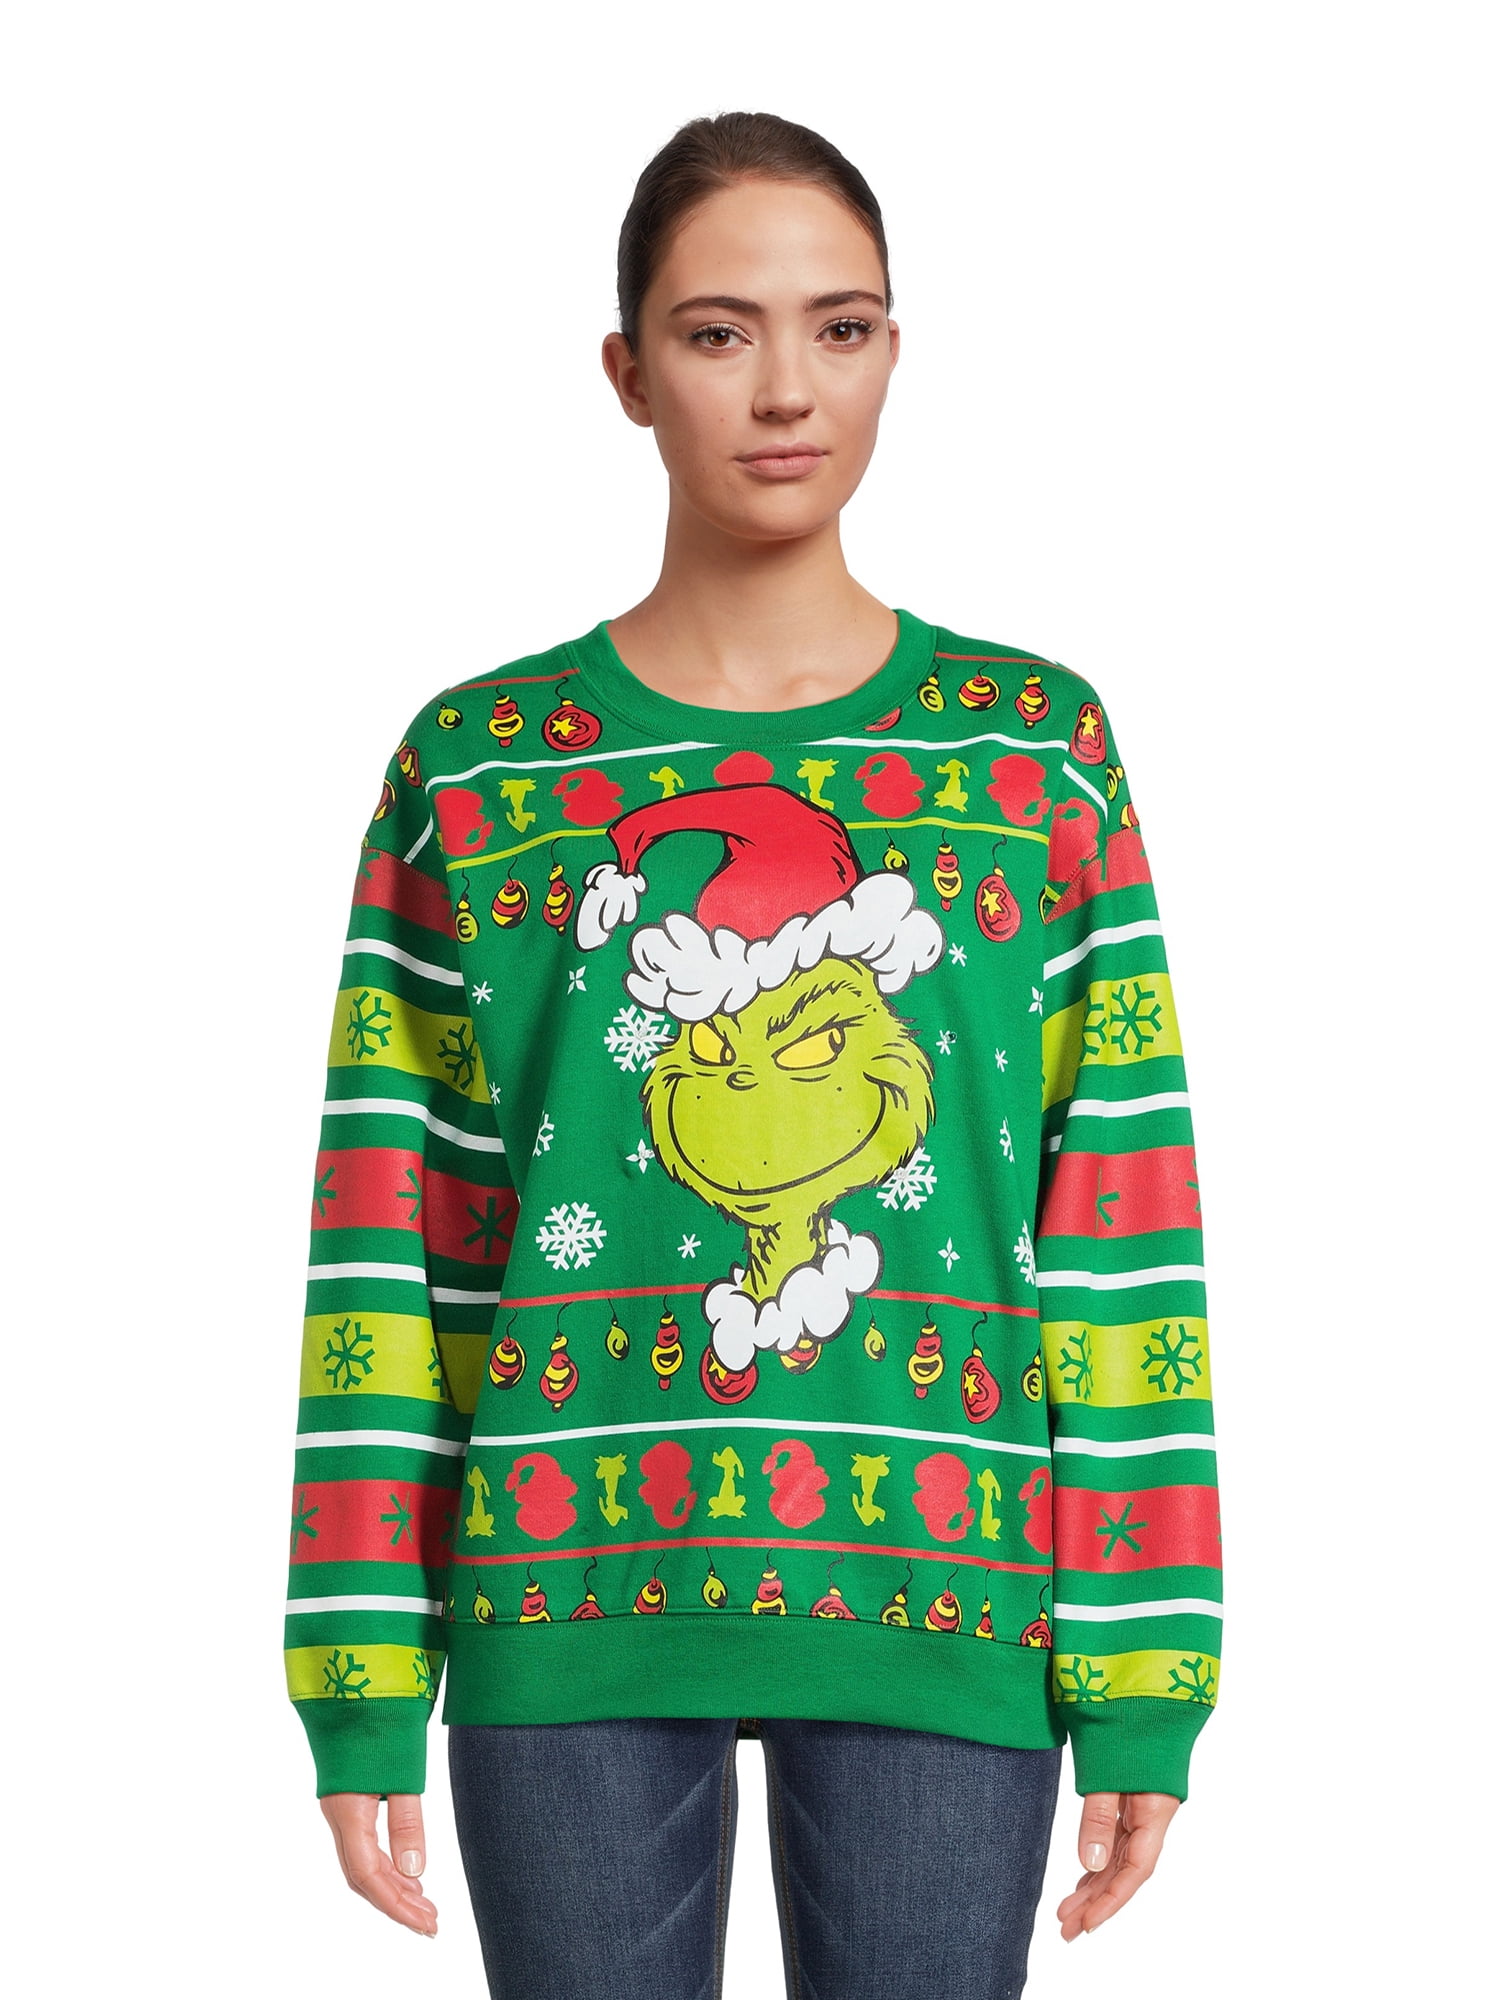 Juniors' Mean Girls Holiday Graphic Sweatshirt